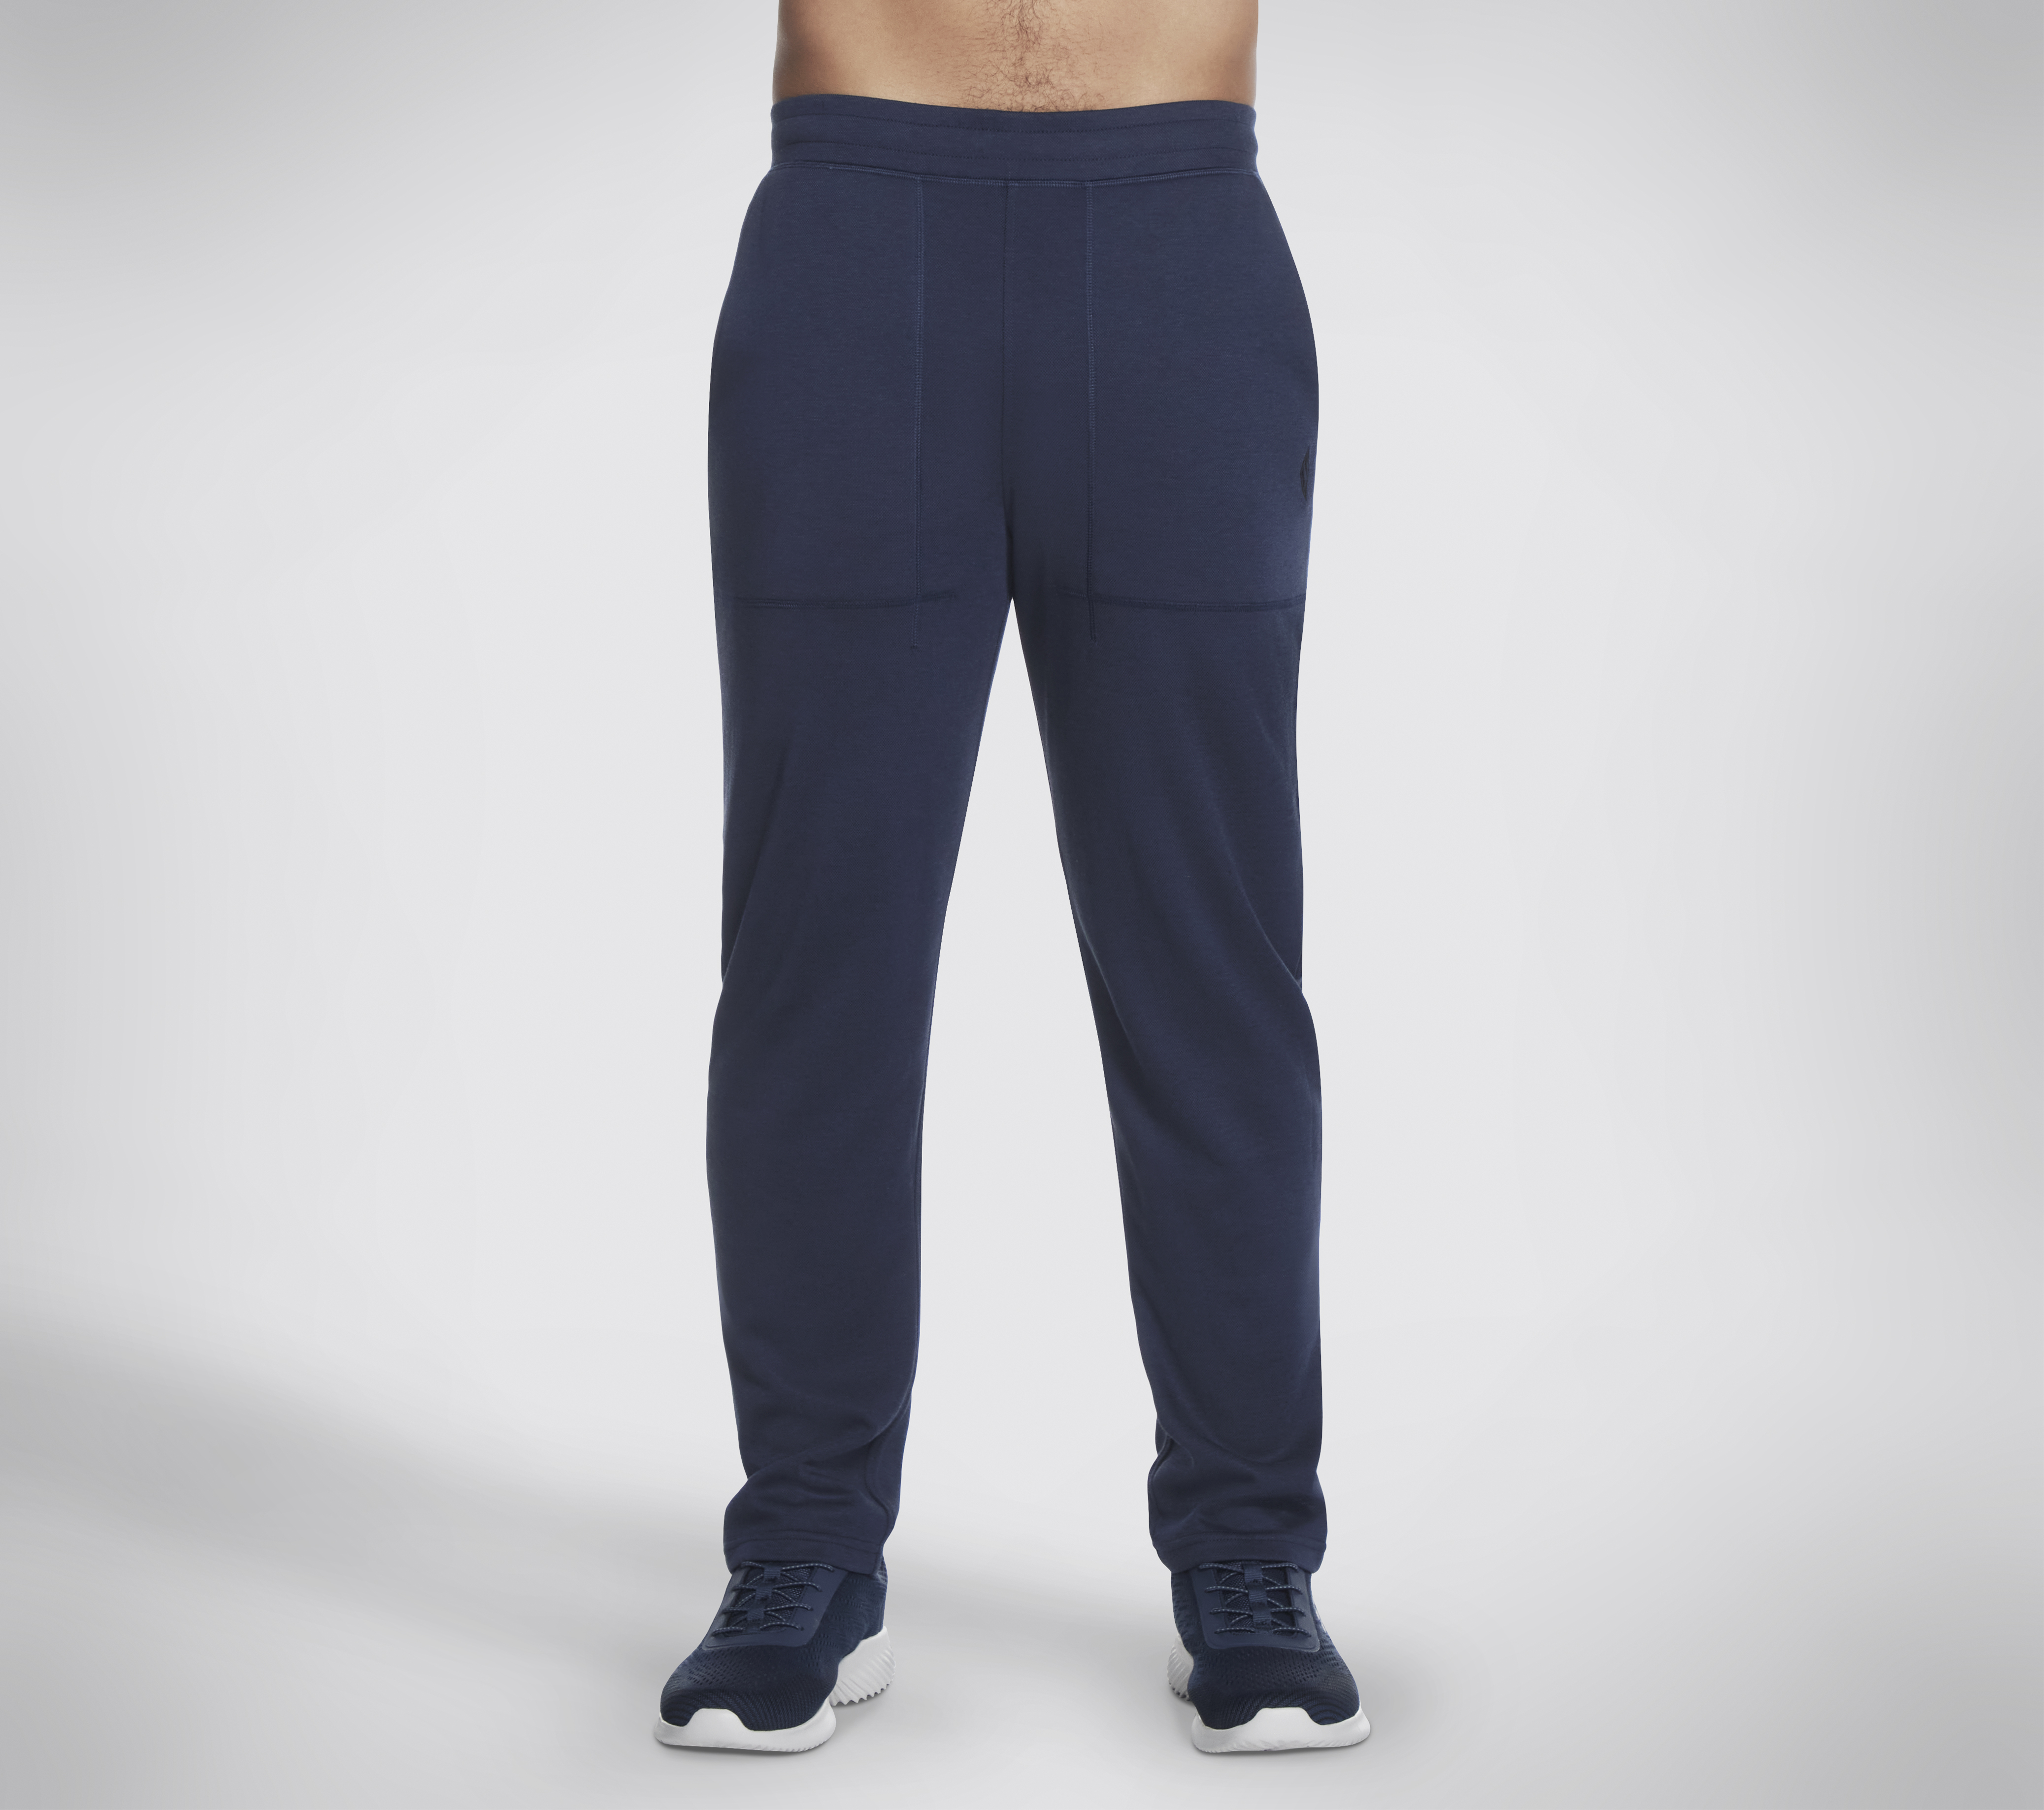 Skechers Men's Apparel GOknit Pique Lounge Pants Size Small Navy Cotton/Polyester